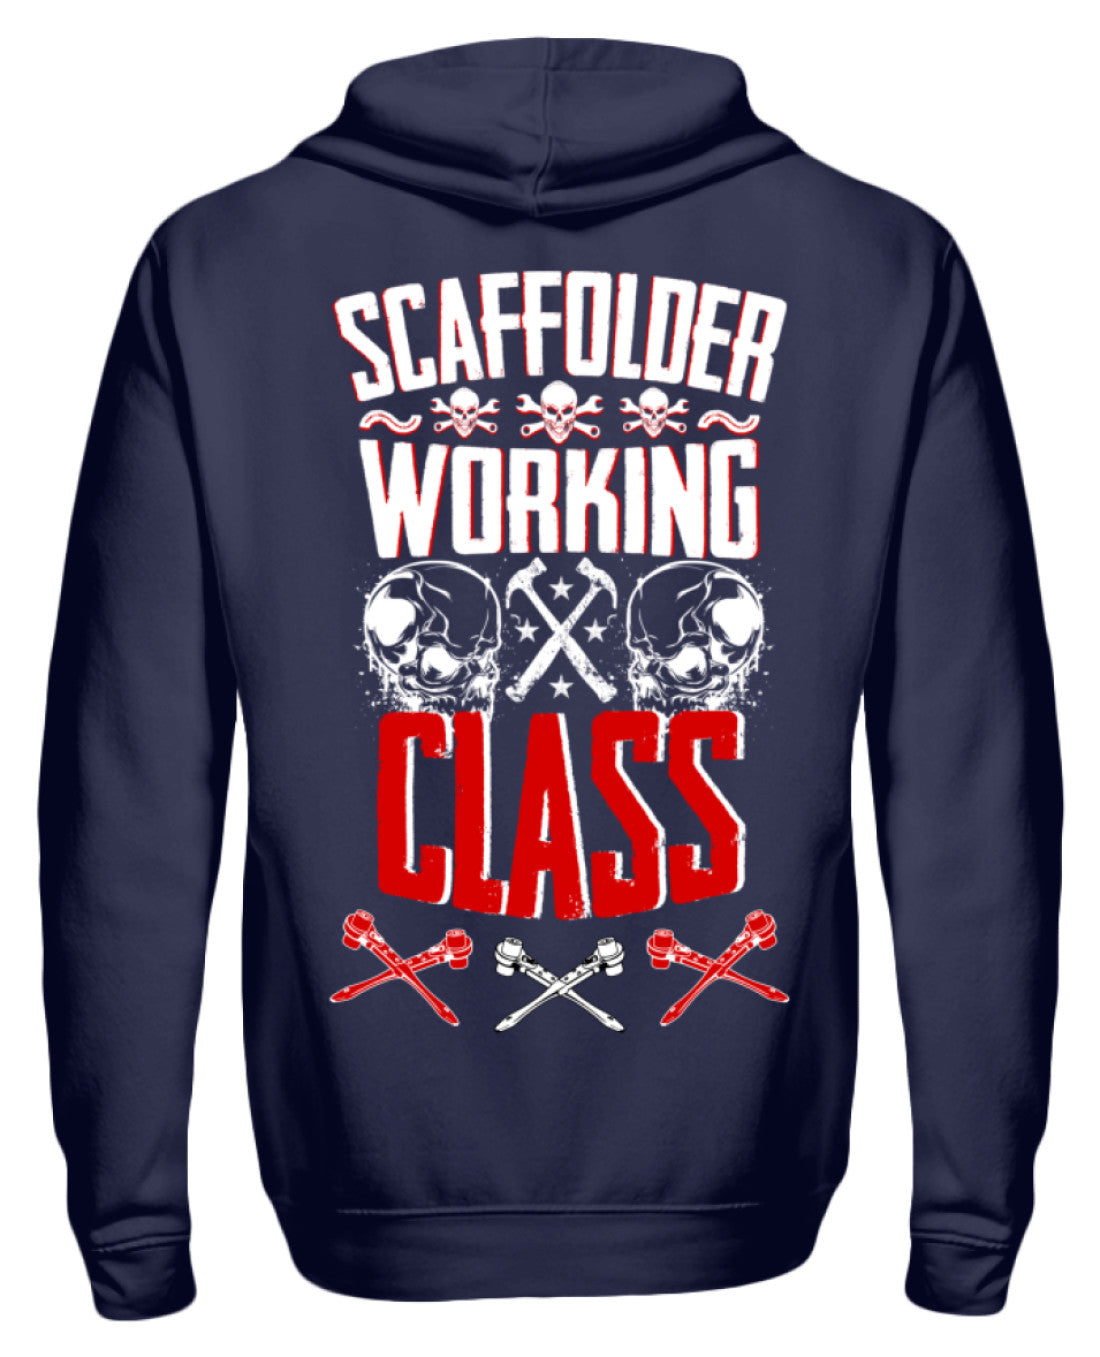 SCAFFOLDER / WORKING CLASS €44.95 Gerüstbauer - Shop >>